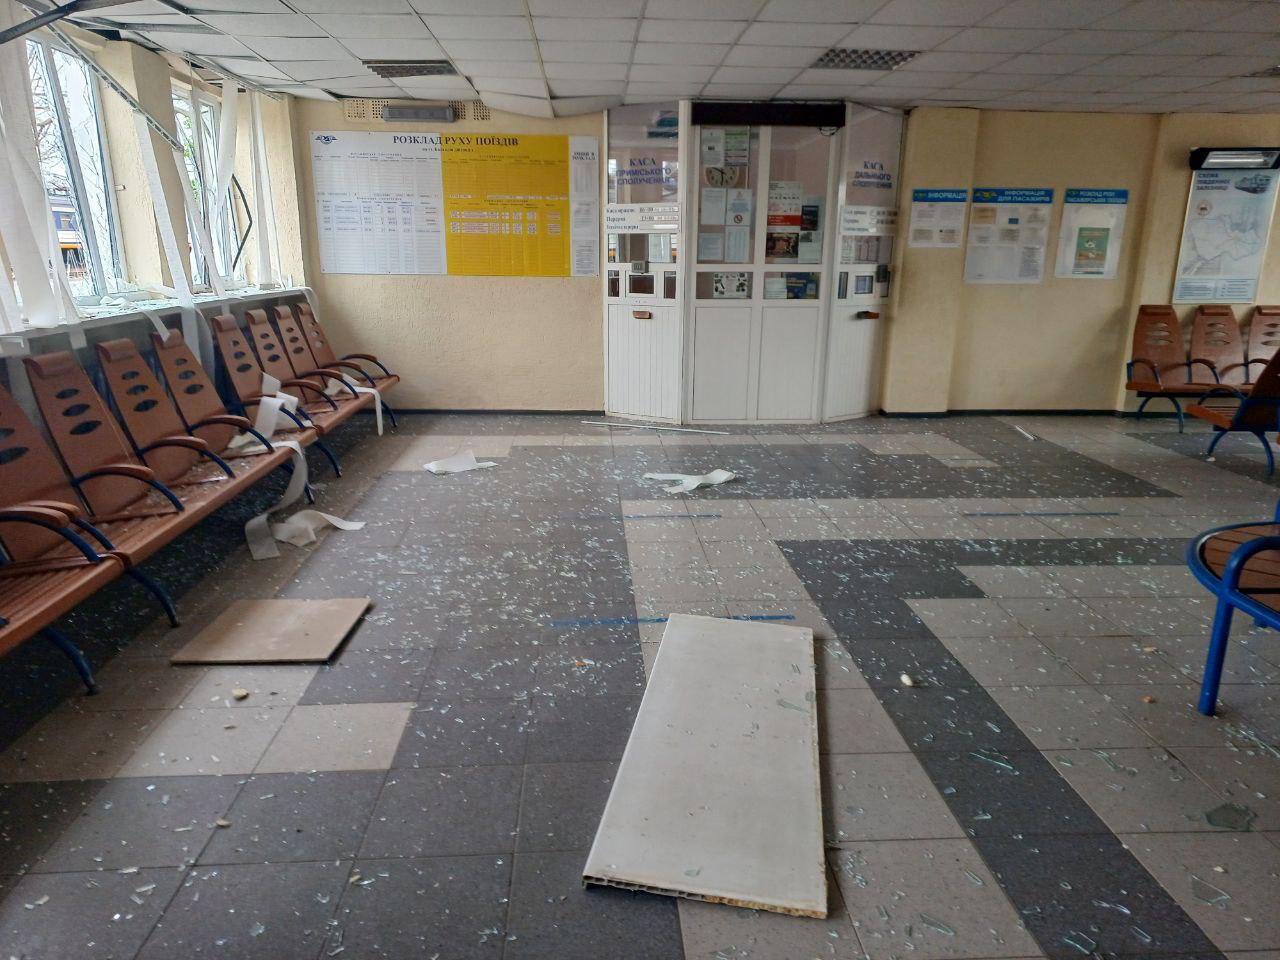 Фото разрушений в зале ожидания. Источник - Телеграм